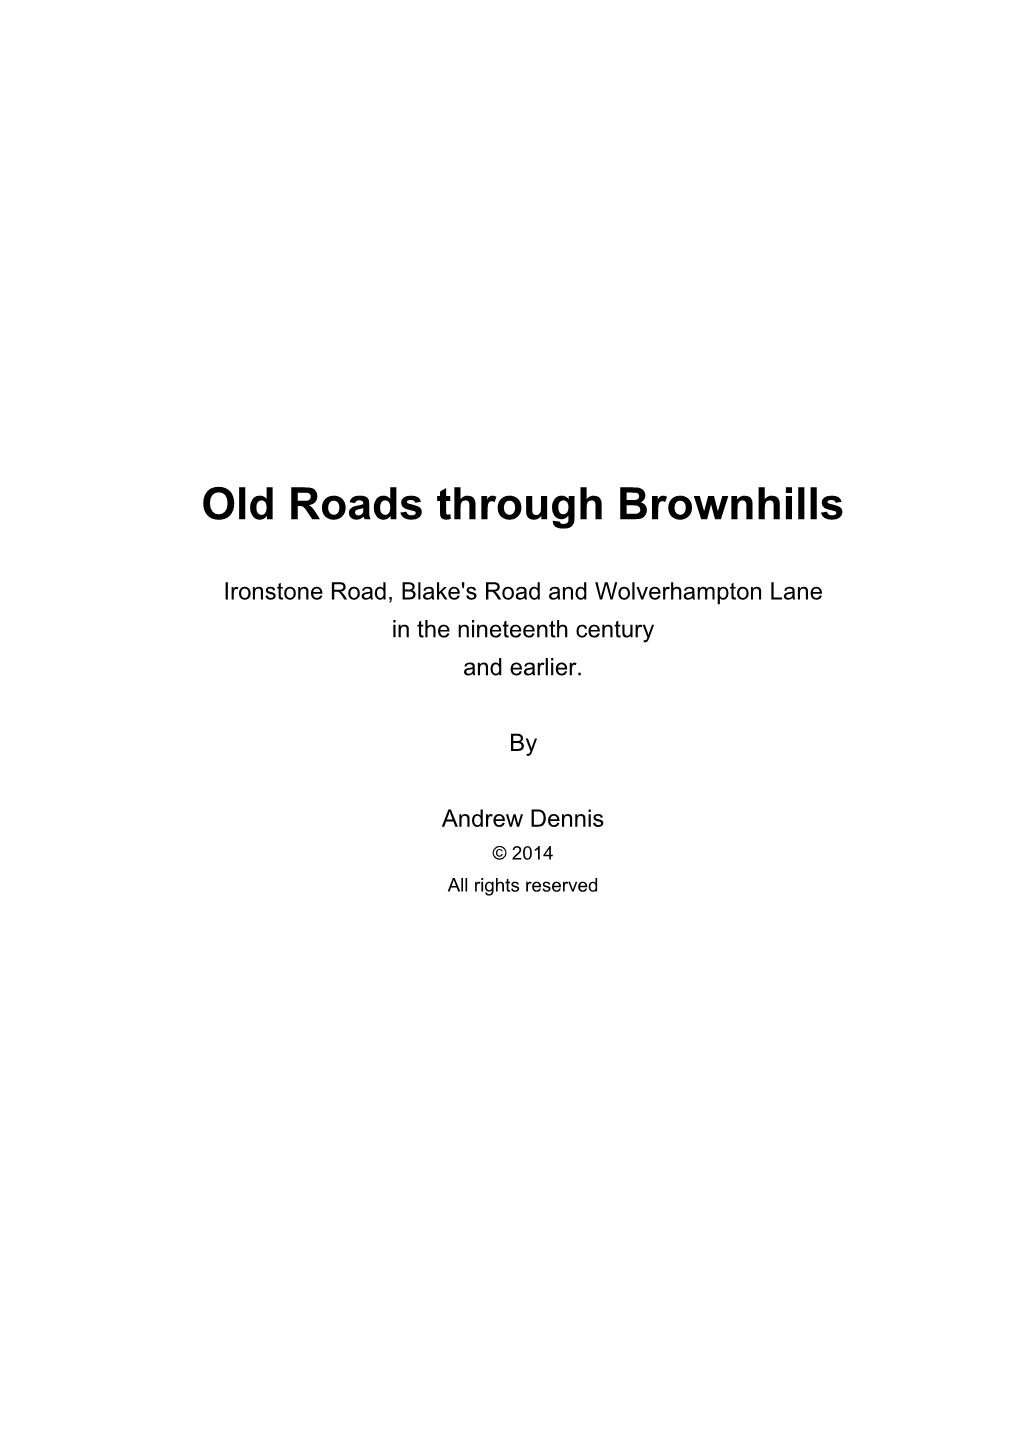 Old Roads Through Brownhills